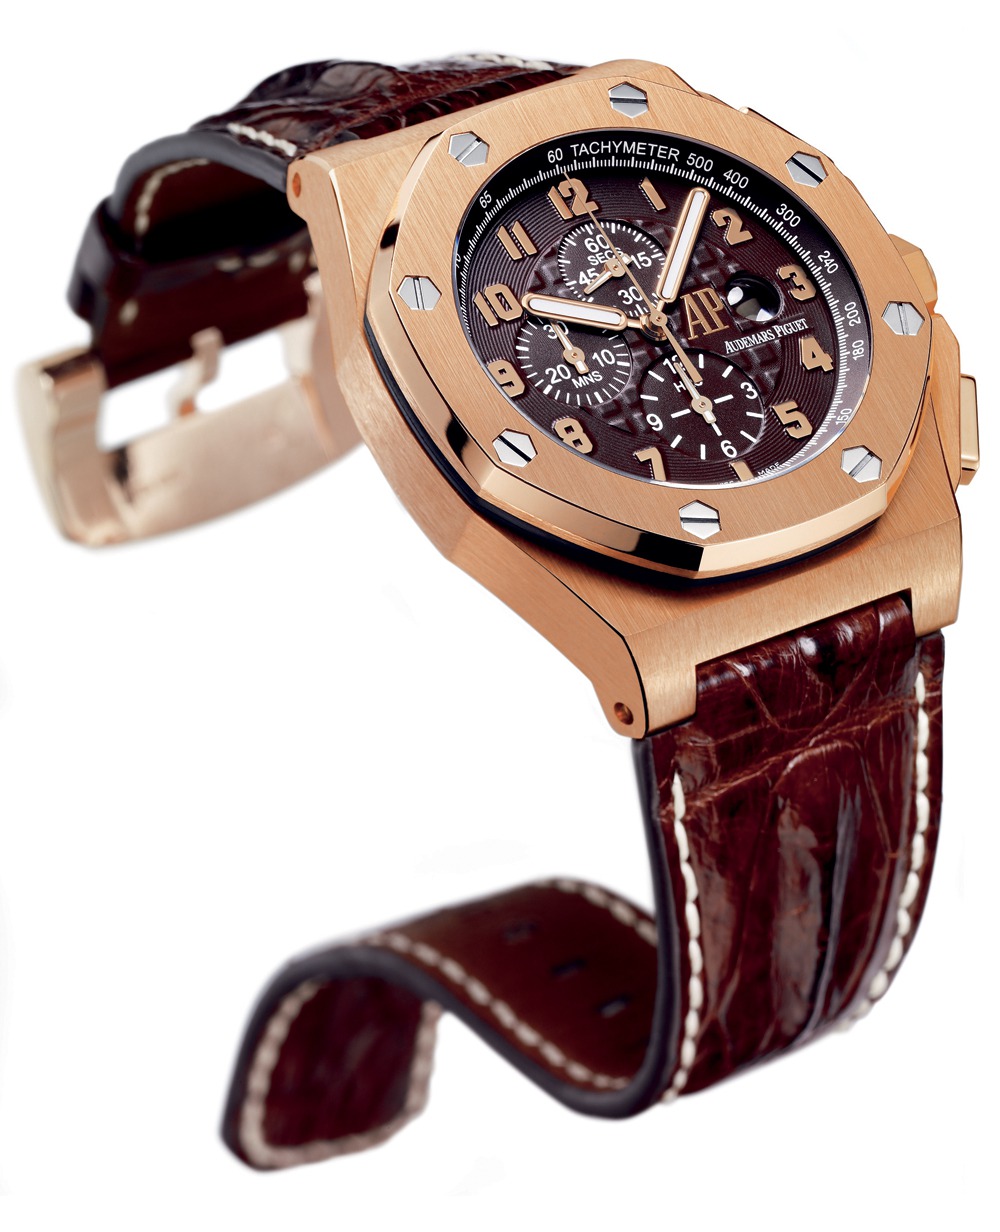 Audemars Piguet Royal Oak Offshore Arnold's All-Stars Rose Gold watch REF: 26158OR.OO.A801CR.01